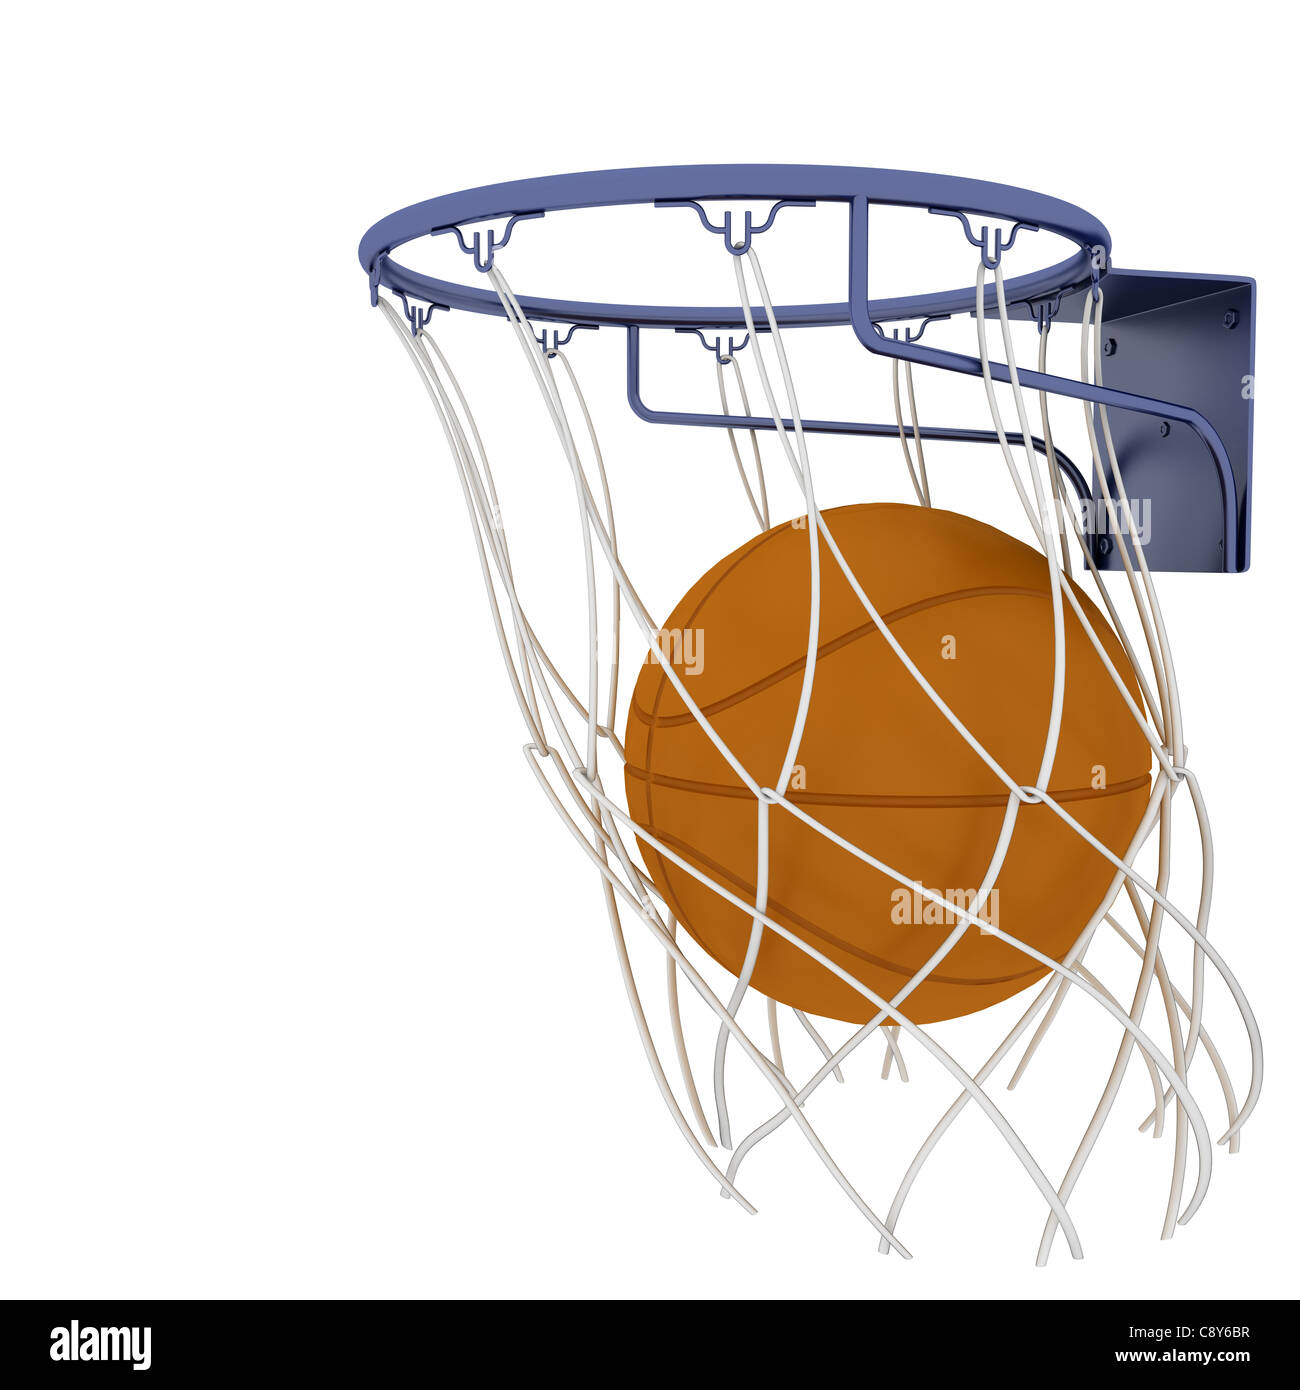 Basketball items Stock Photo